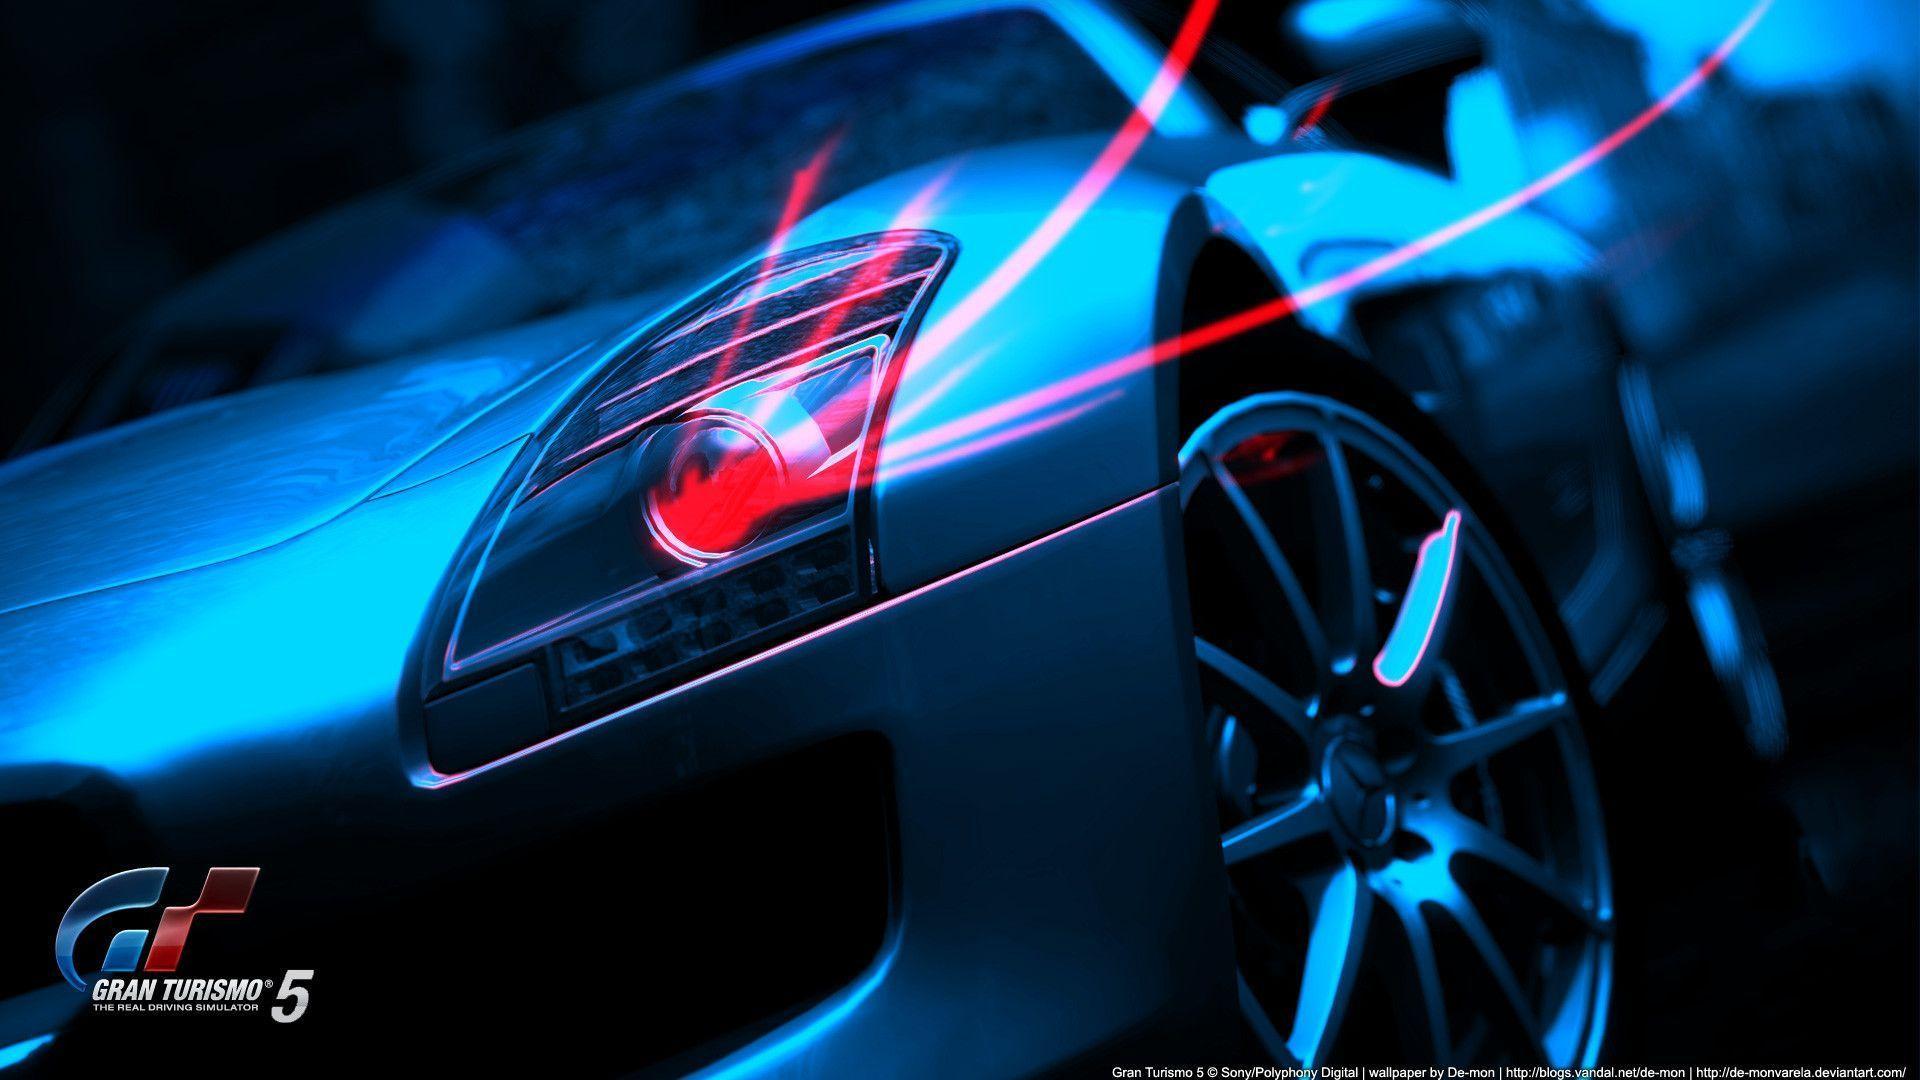 Gran Turismo 5 Wallpaper in HD